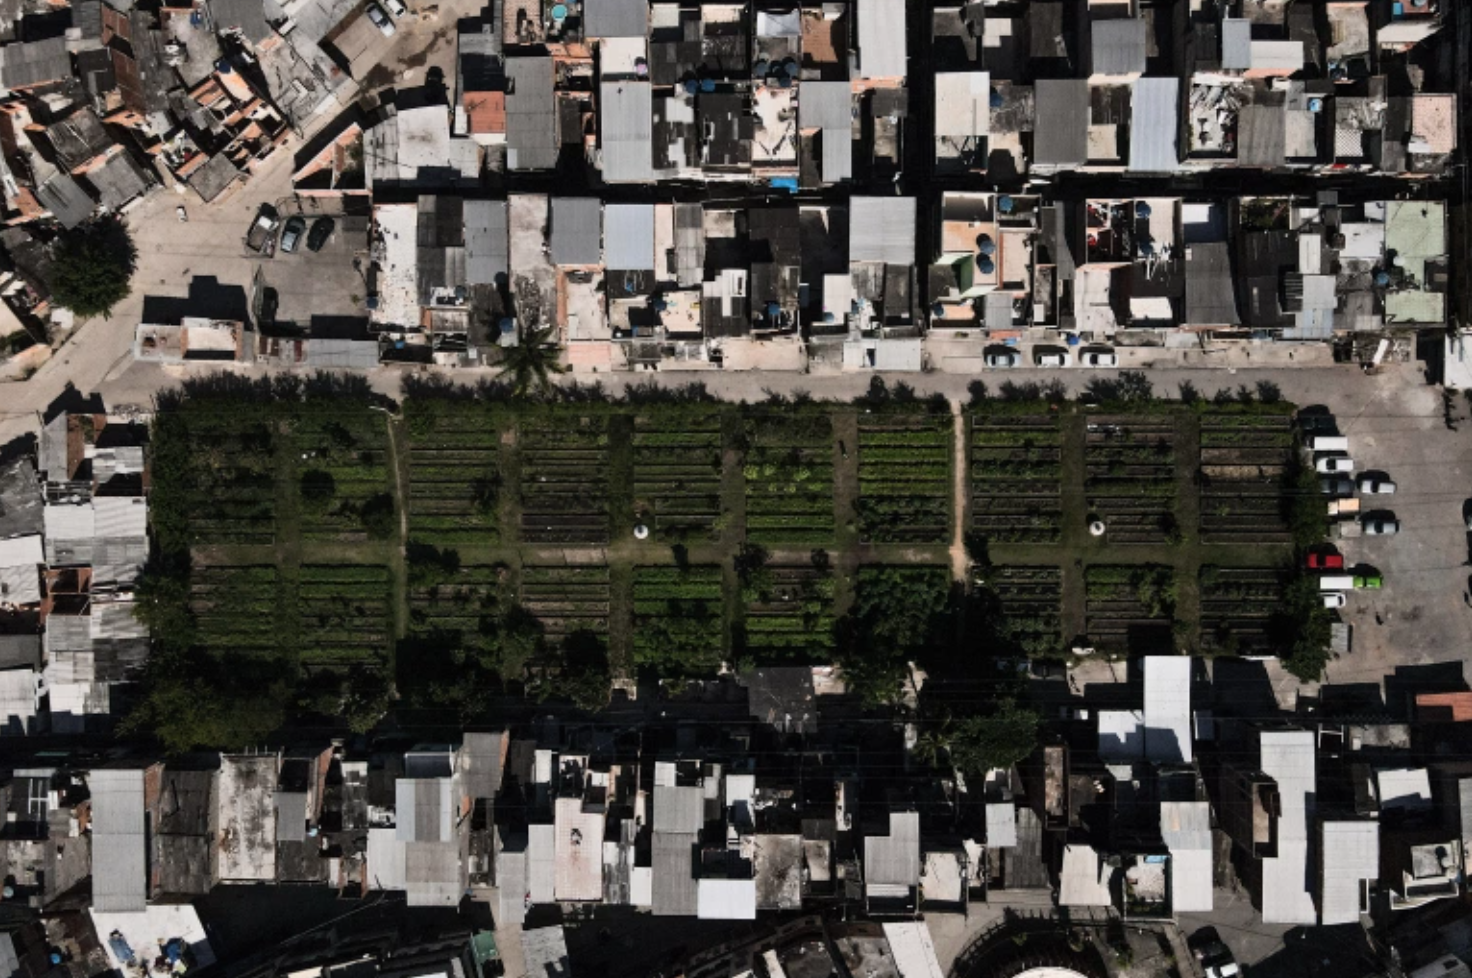 The Horta de Manguinhos project is an urban farm in what was once a drug-plagued favela in Rio de Janeiro [Ian Cheibub/Al Jazeera]